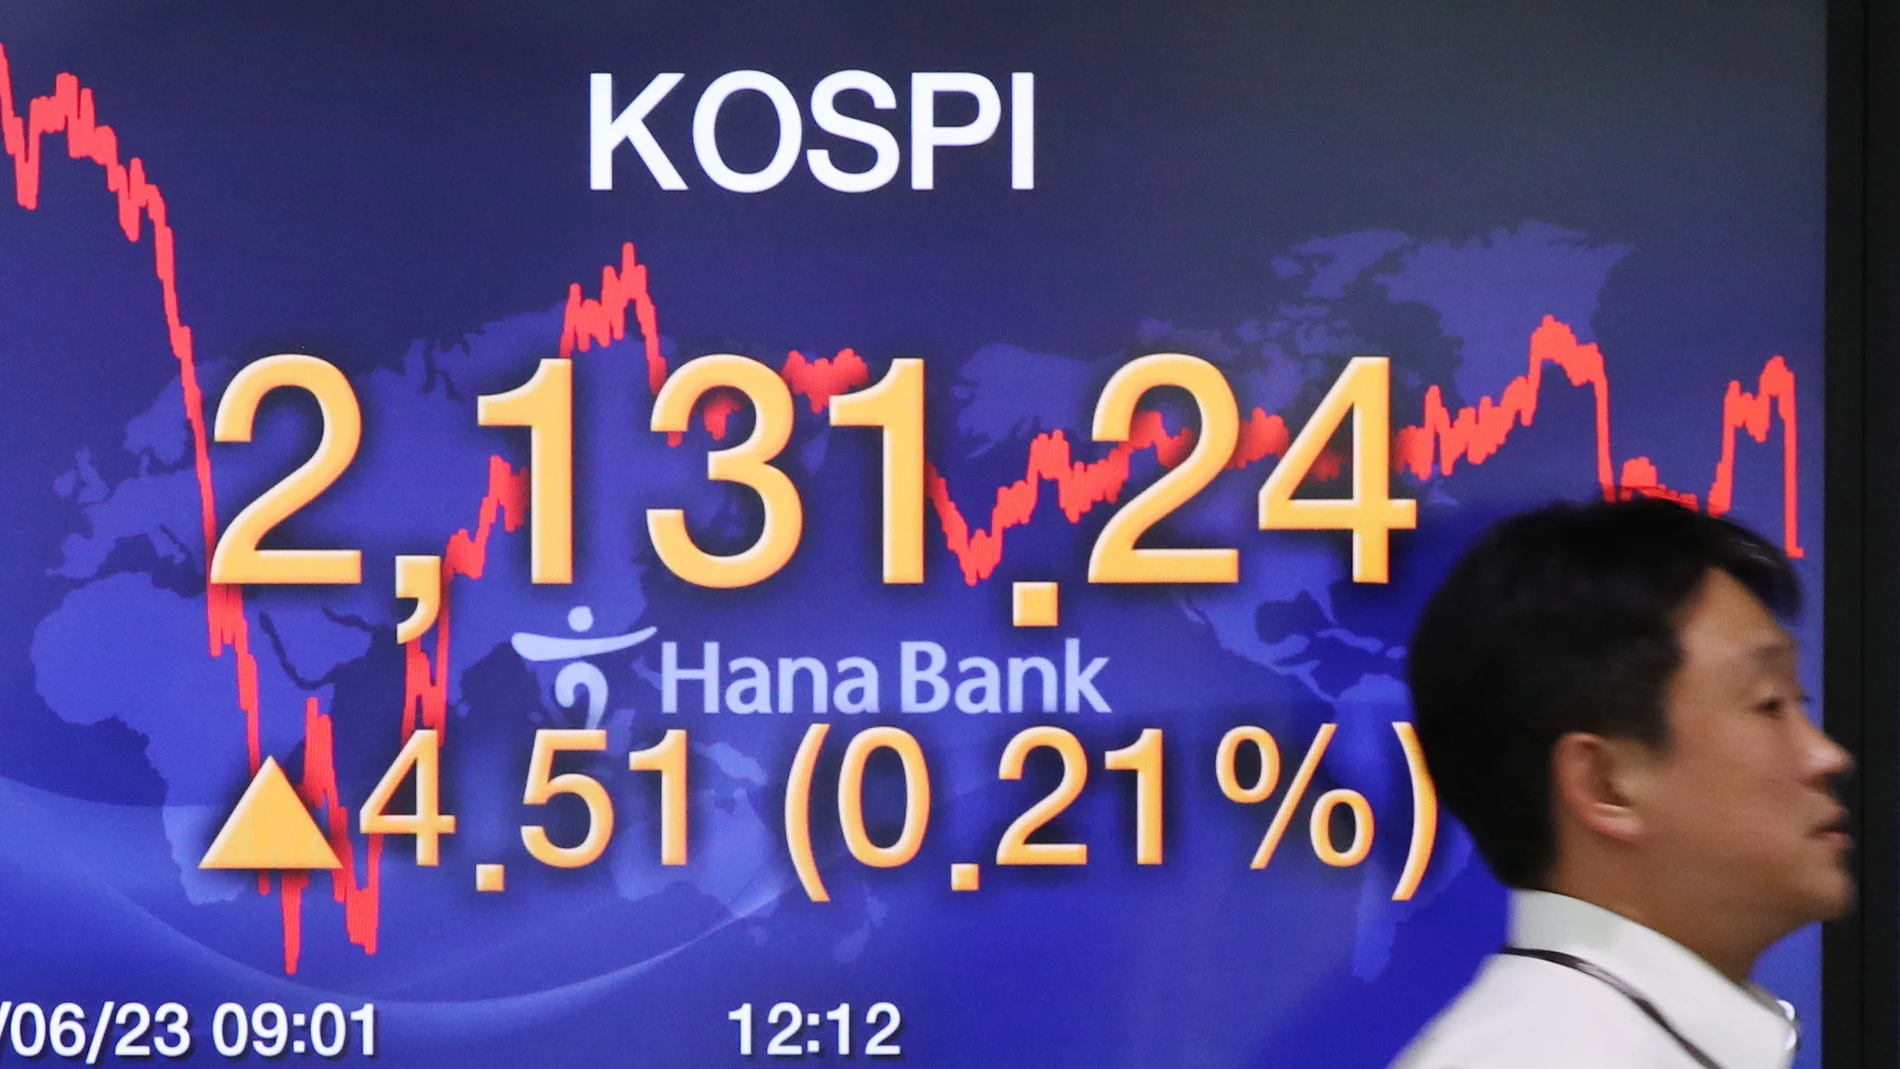 KOSPI rises in South Korea